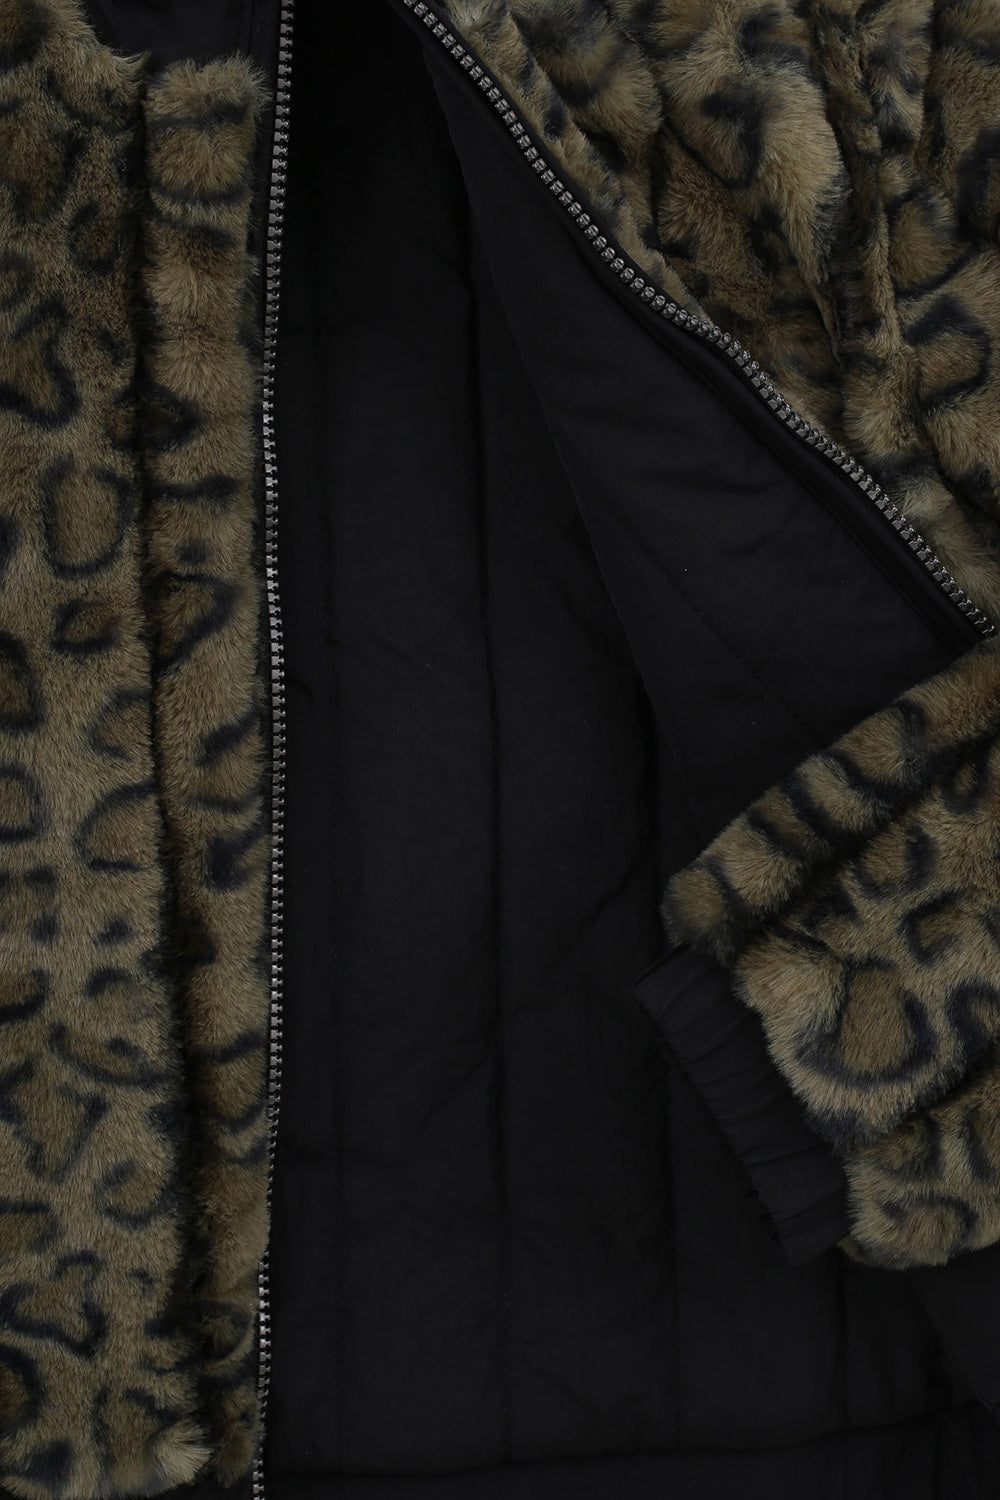 Meisjes Reversible Fur Jacket van Looxs 10sixteen in de kleur army in maat 164.